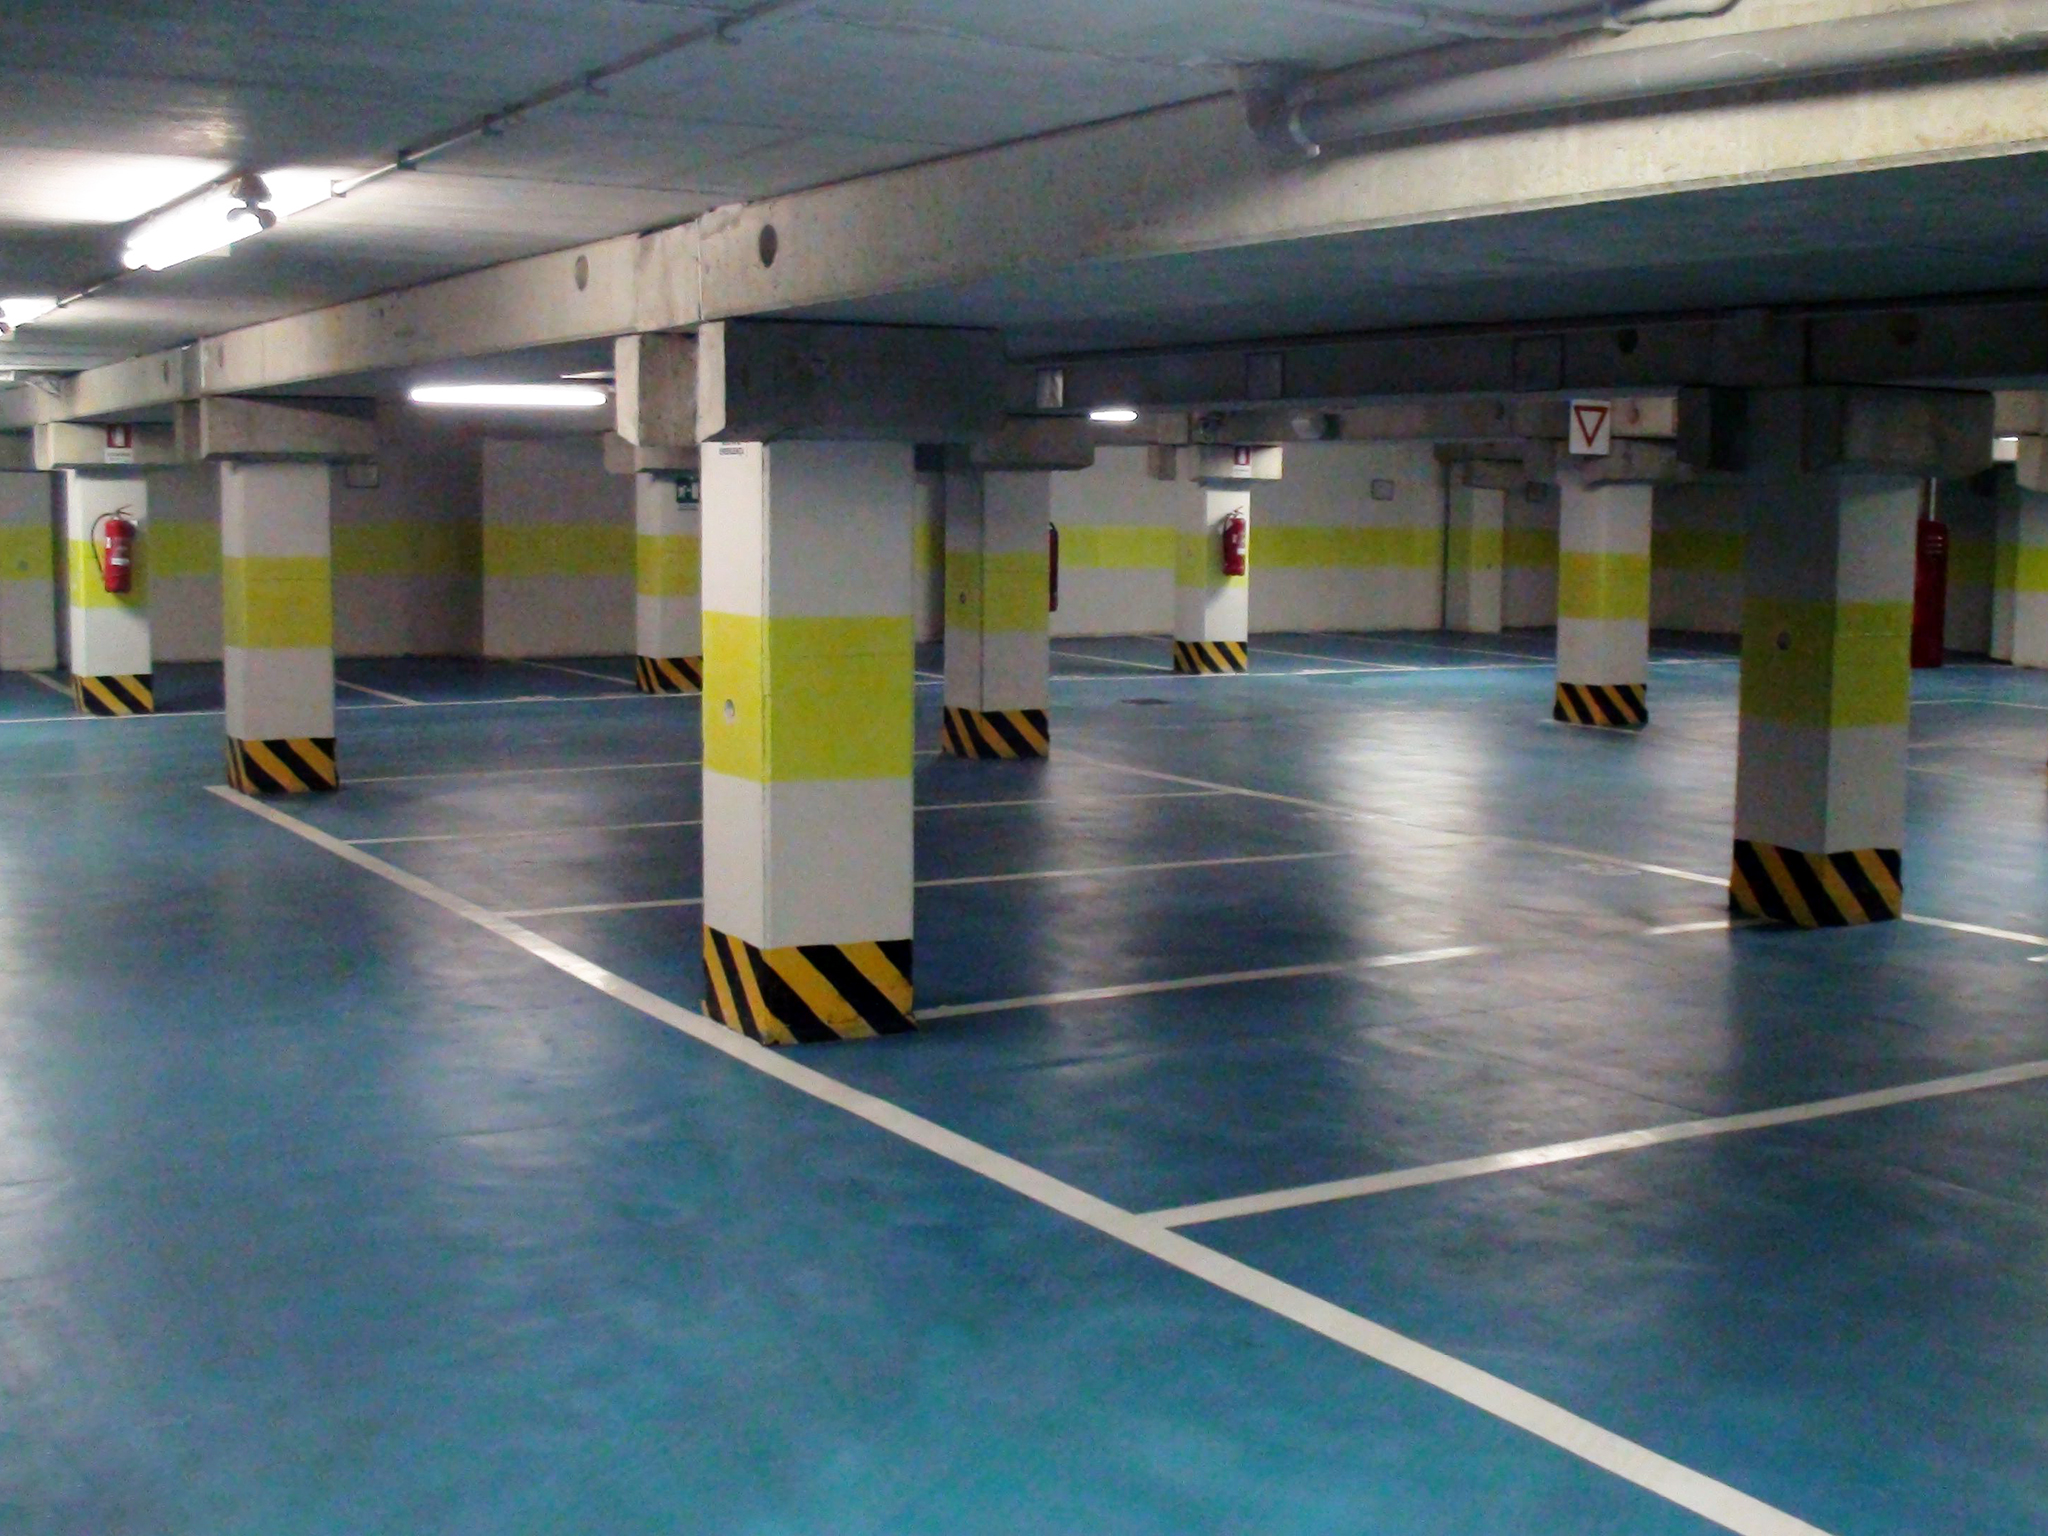 Indoor parking lots to rent in the garage at the second basement floor - Atlantic Business Center - Milan